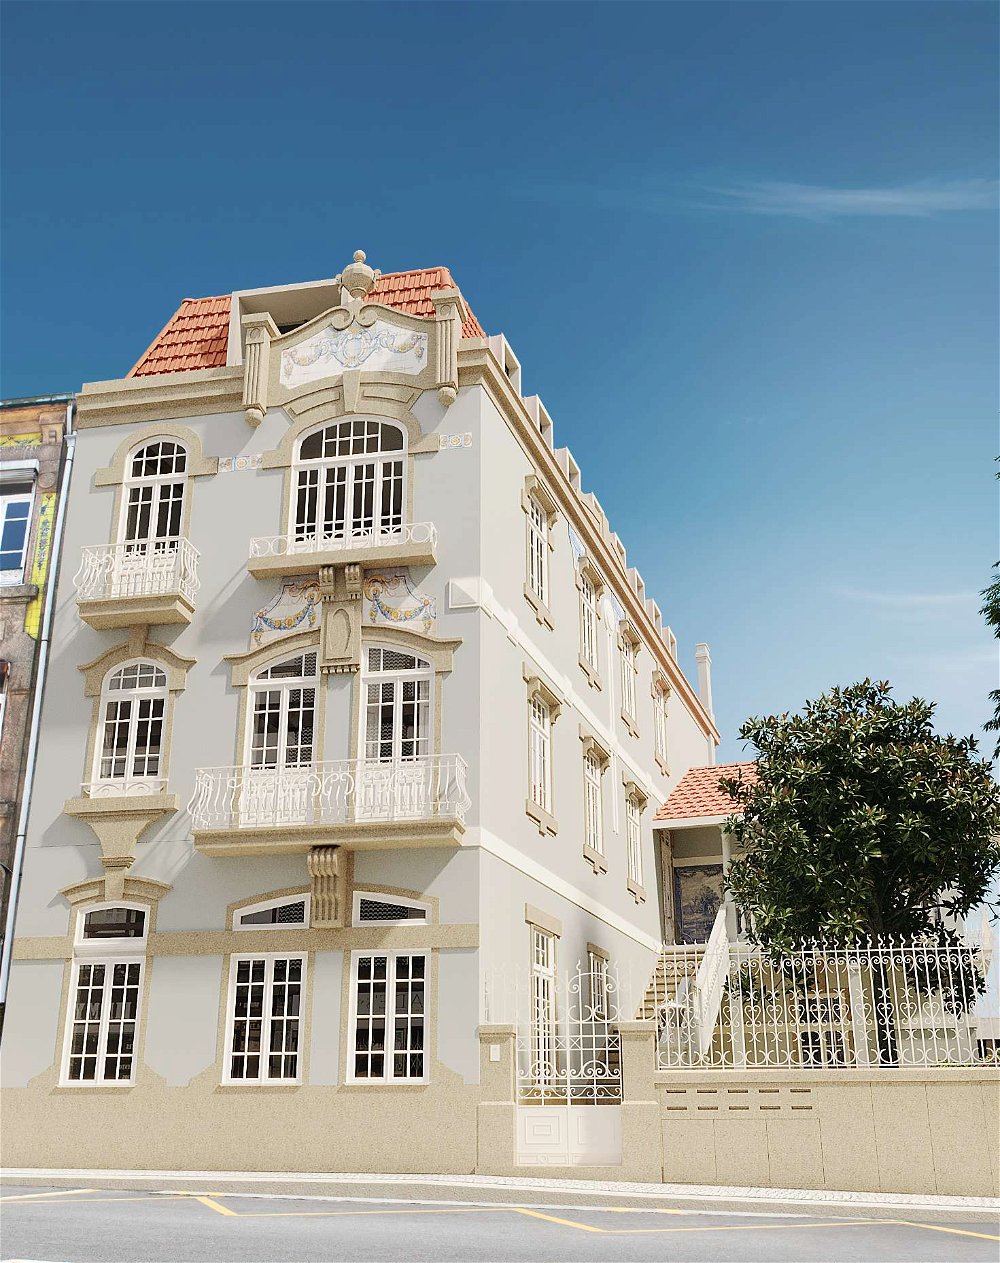 4 bedroom Villa with balcony and garden in Cedofeita, Porto 3310536421